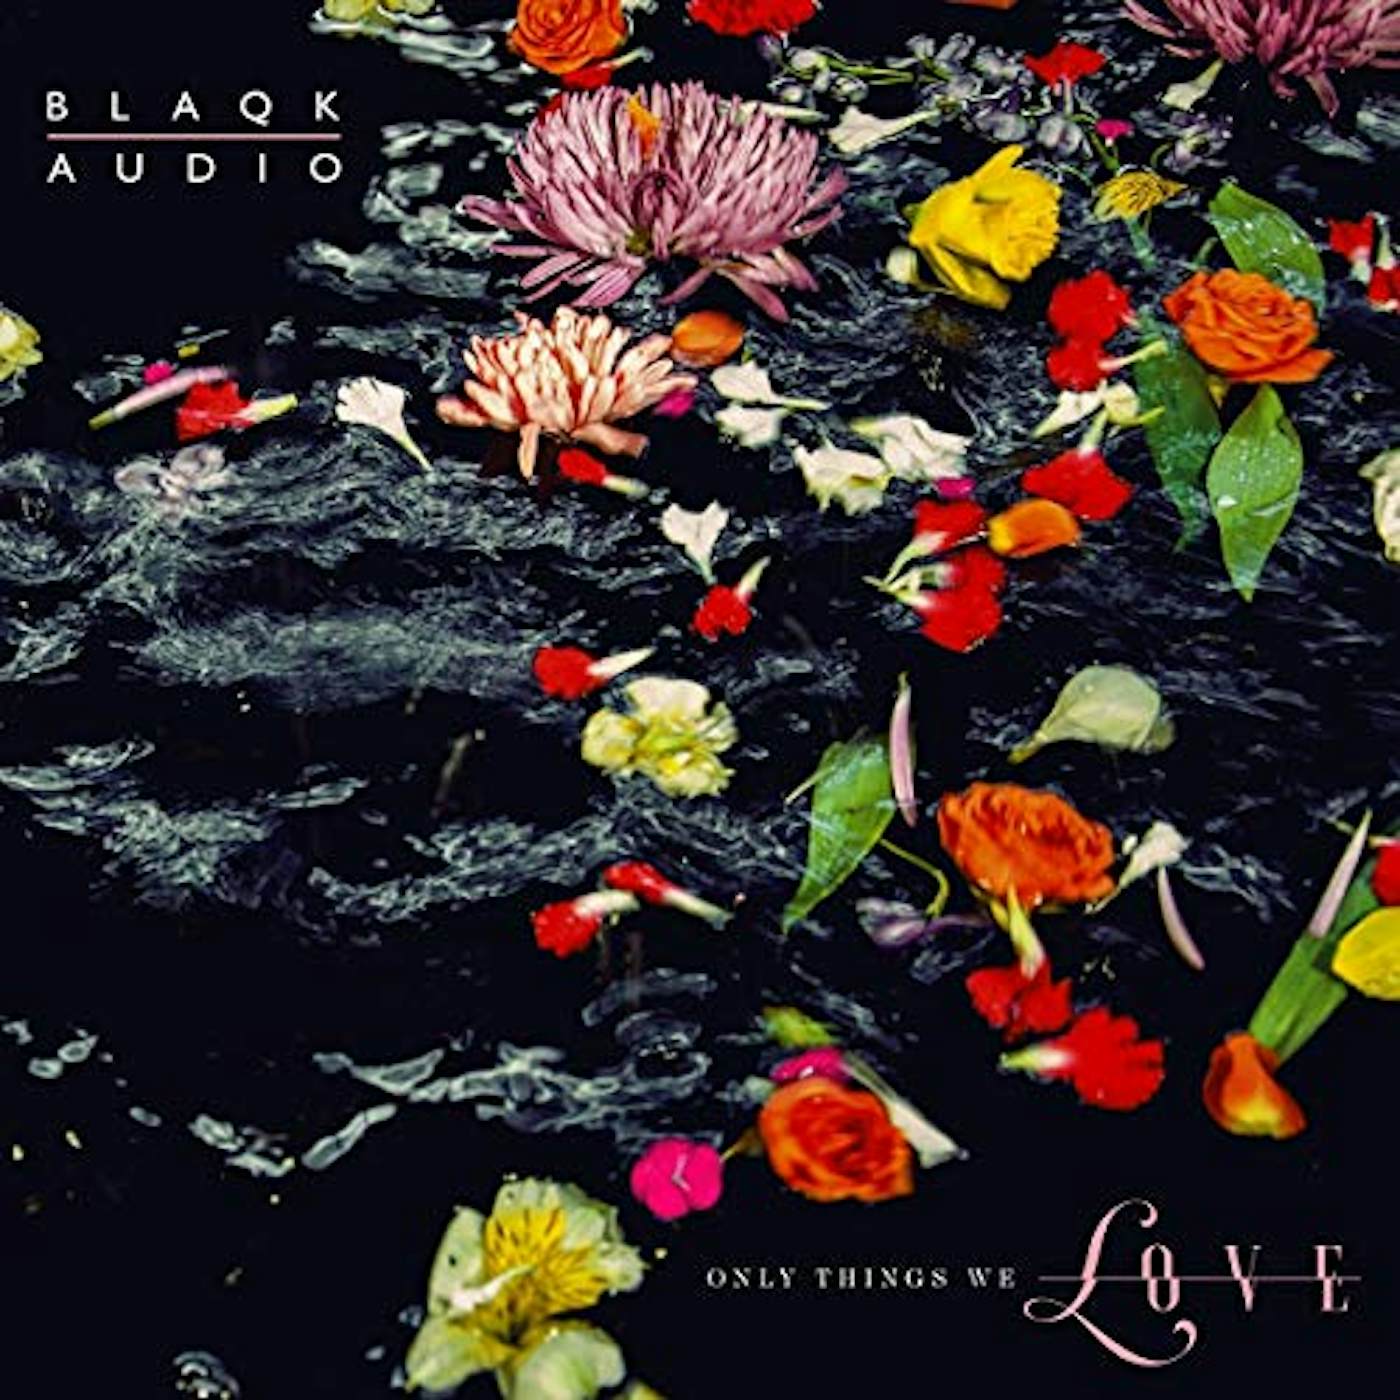 Blaqk Audio ONLY THINGS WE LOVE CD